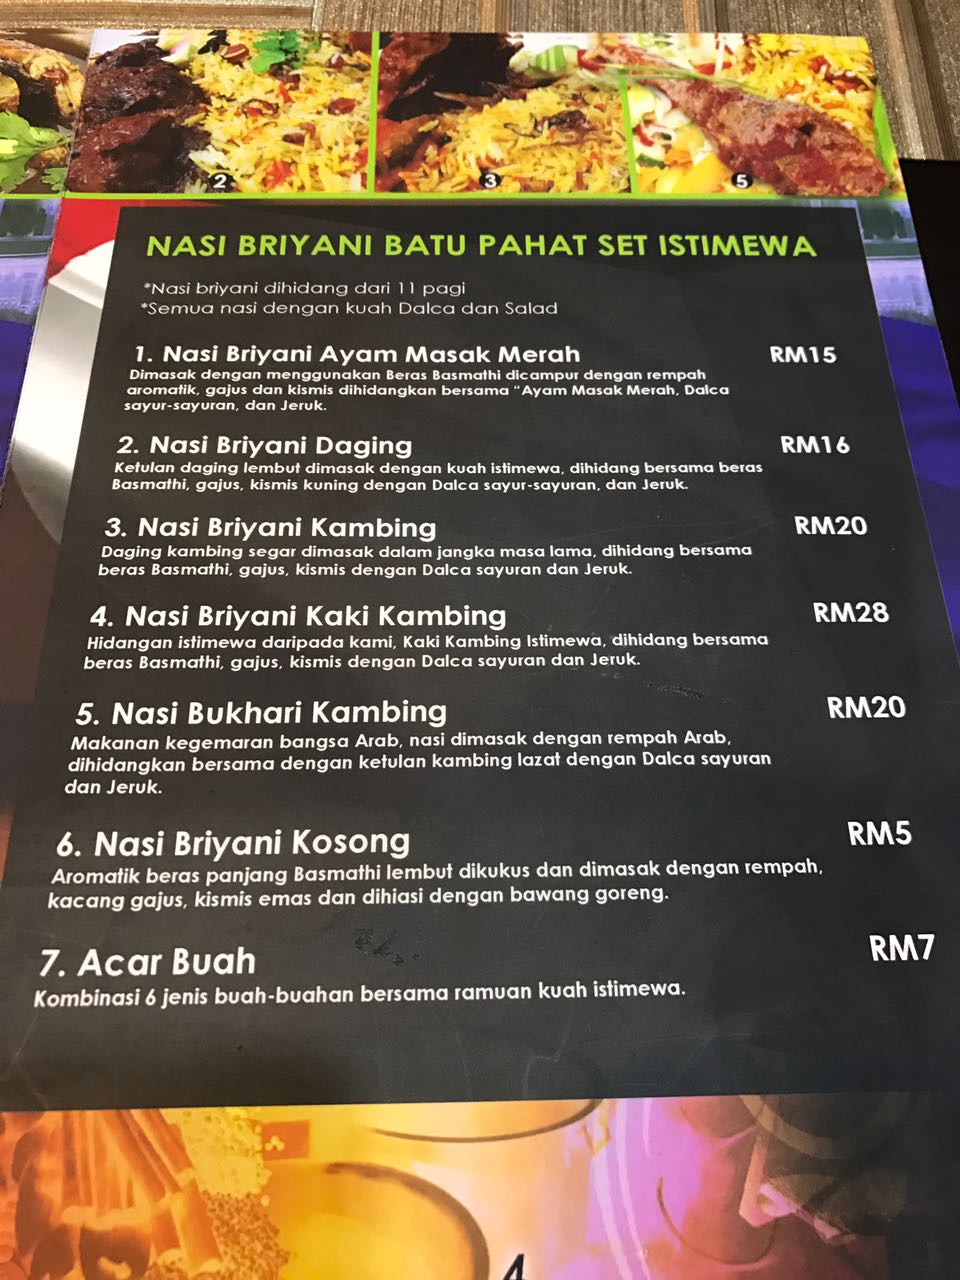 Image result for restoran sri wangsa briyani batu pahat kl